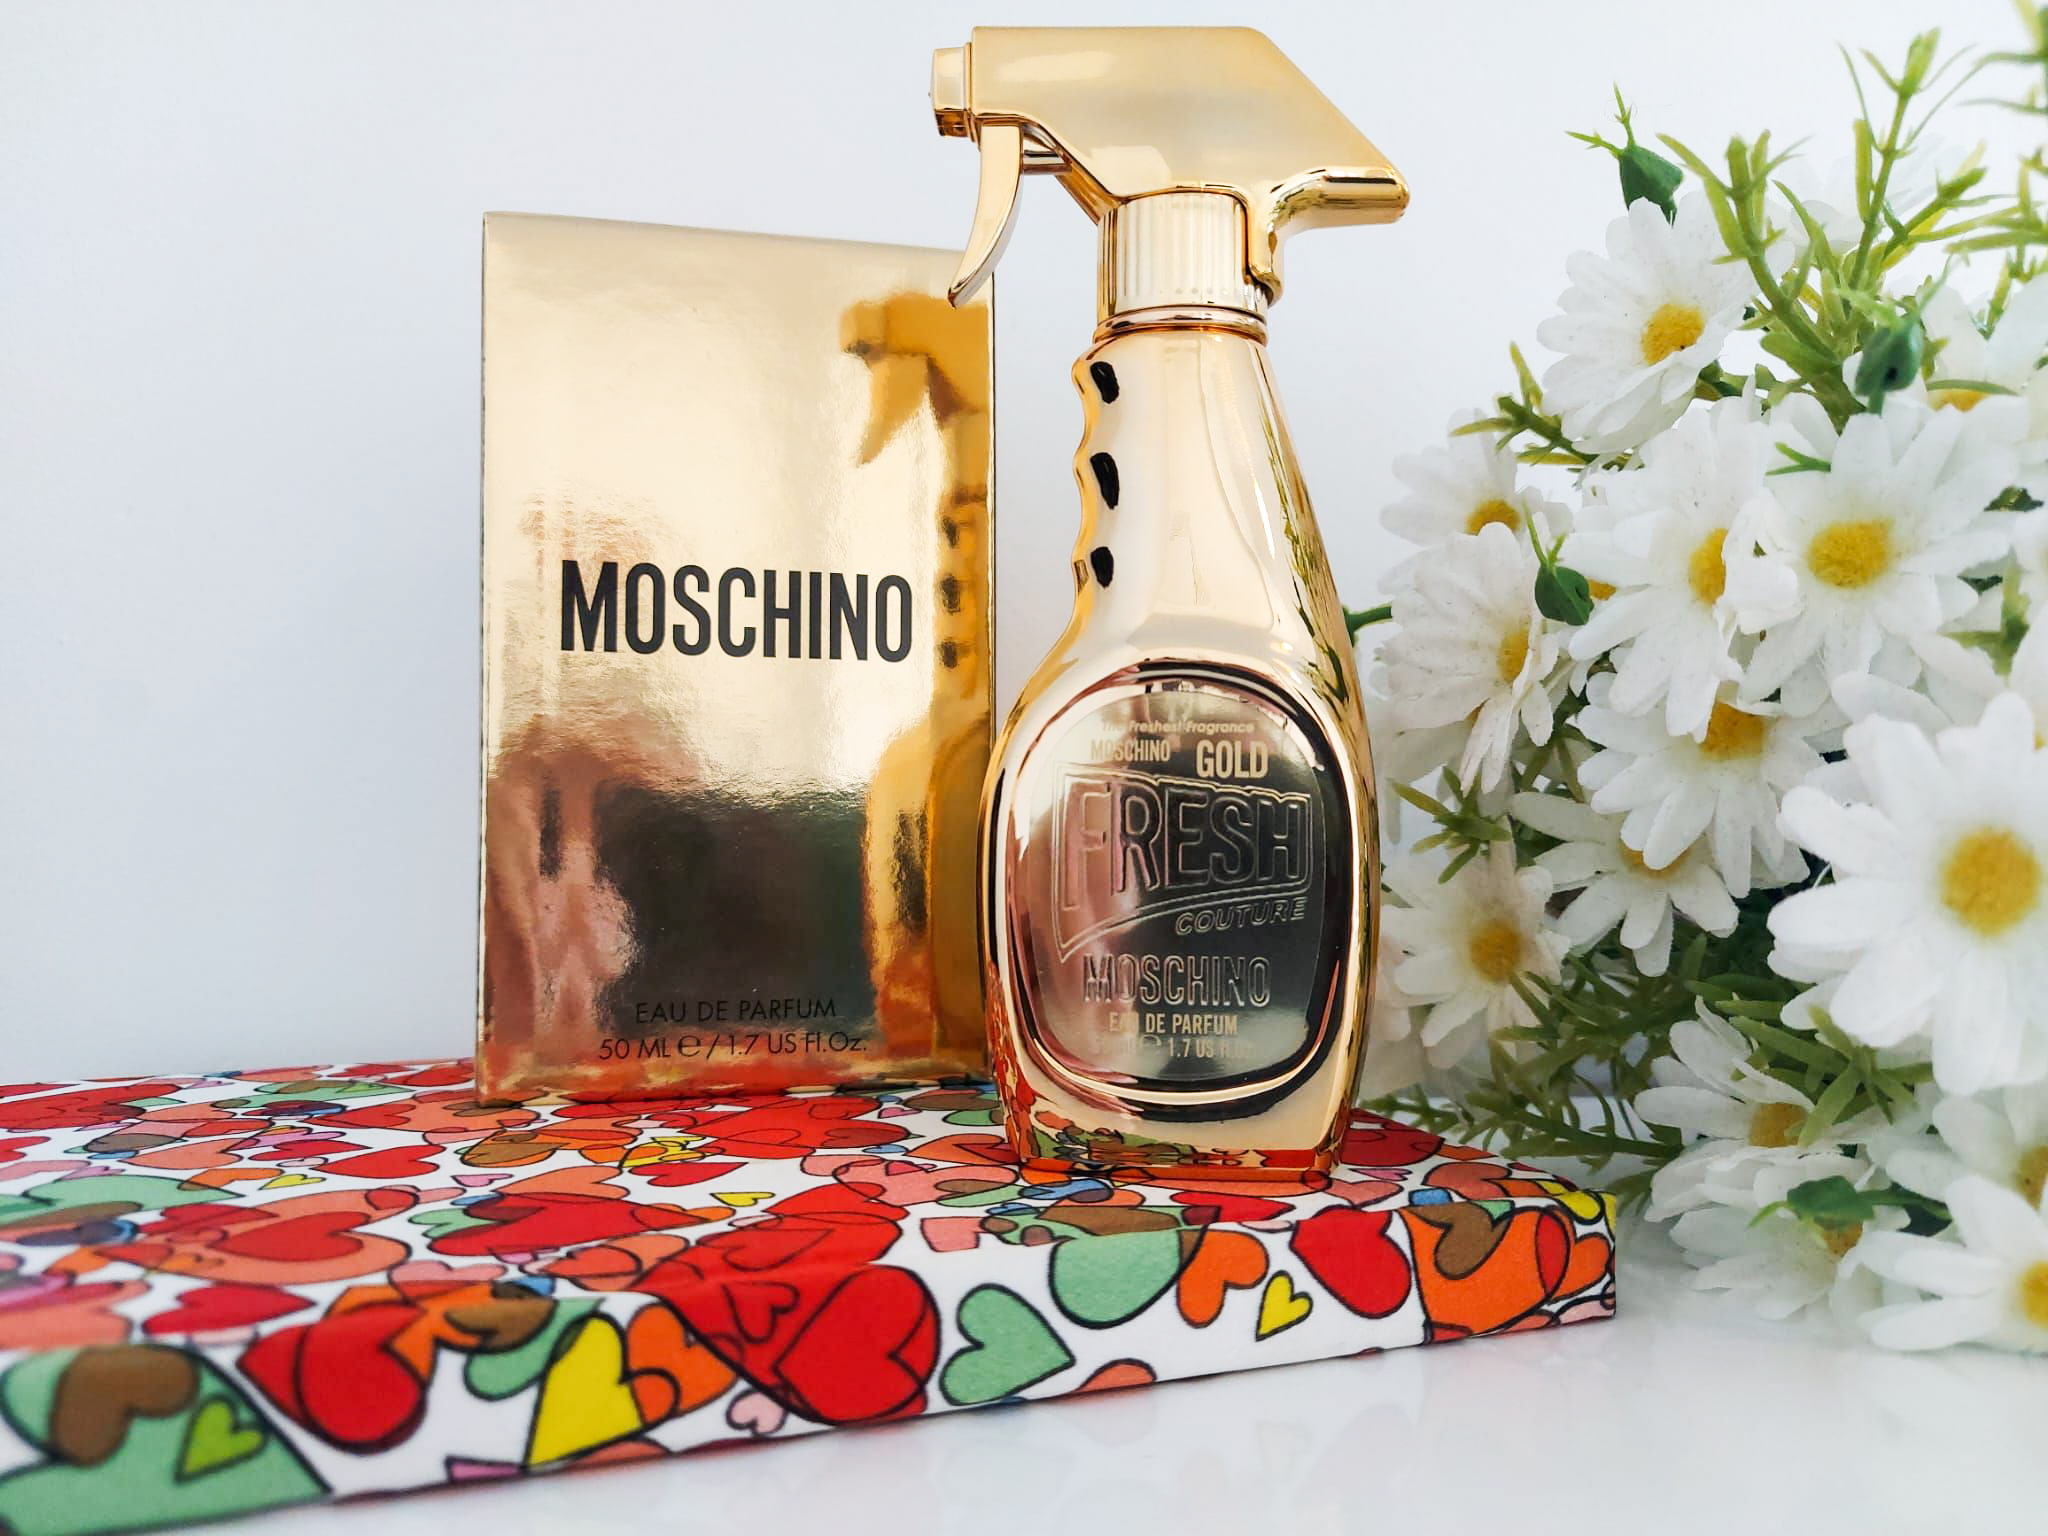 Moschino fresh gold. Moschino Gold Fresh Couture. Moschino духи золотые.